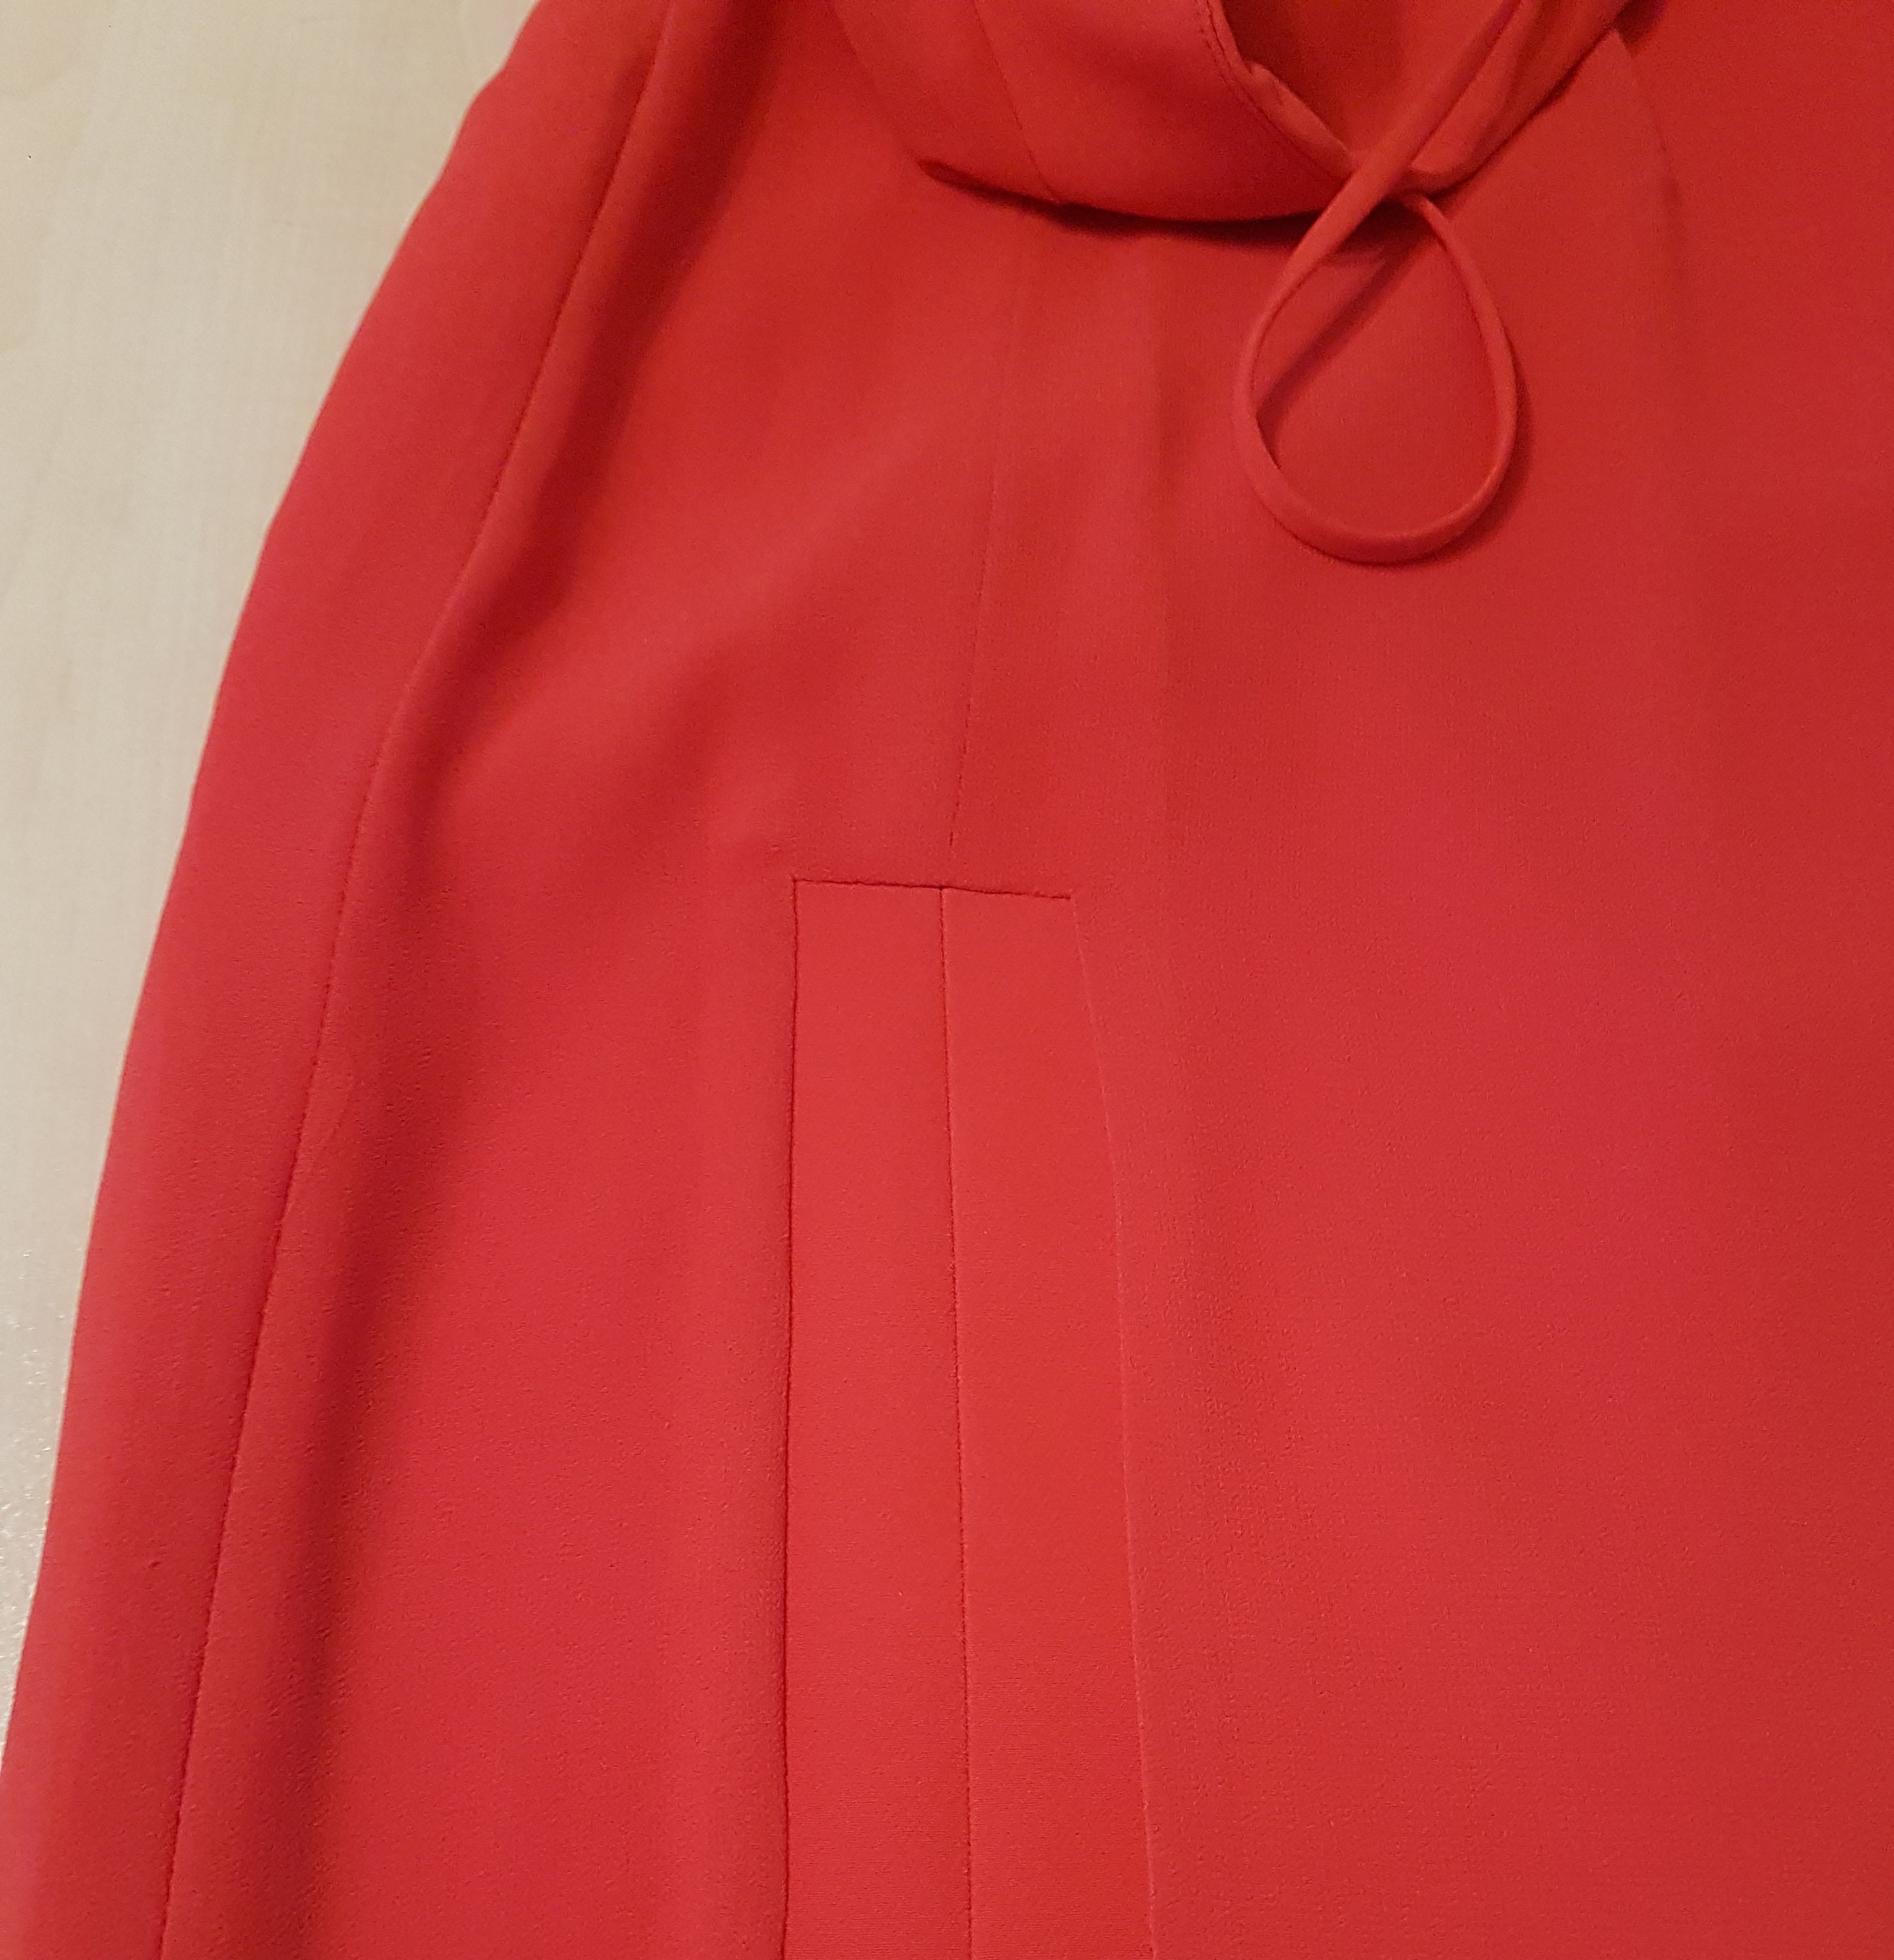 RED Elegant Formal Dress. Minimal Tailored Dress. Basic Long - Etsy